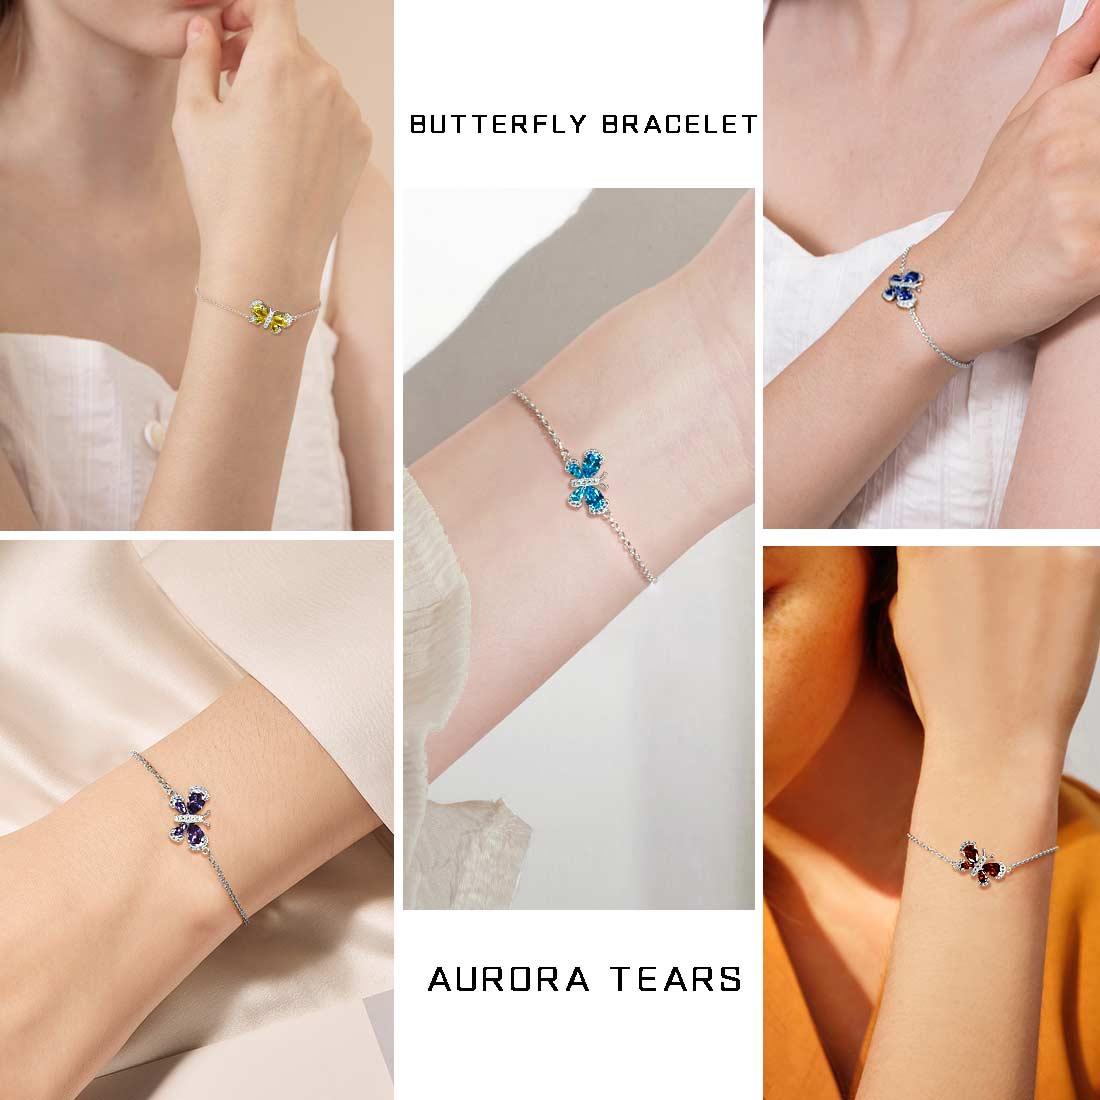 Butterfly Bracelet Birthstone January Garnet Crystal Link - Bracelet - Aurora Tears